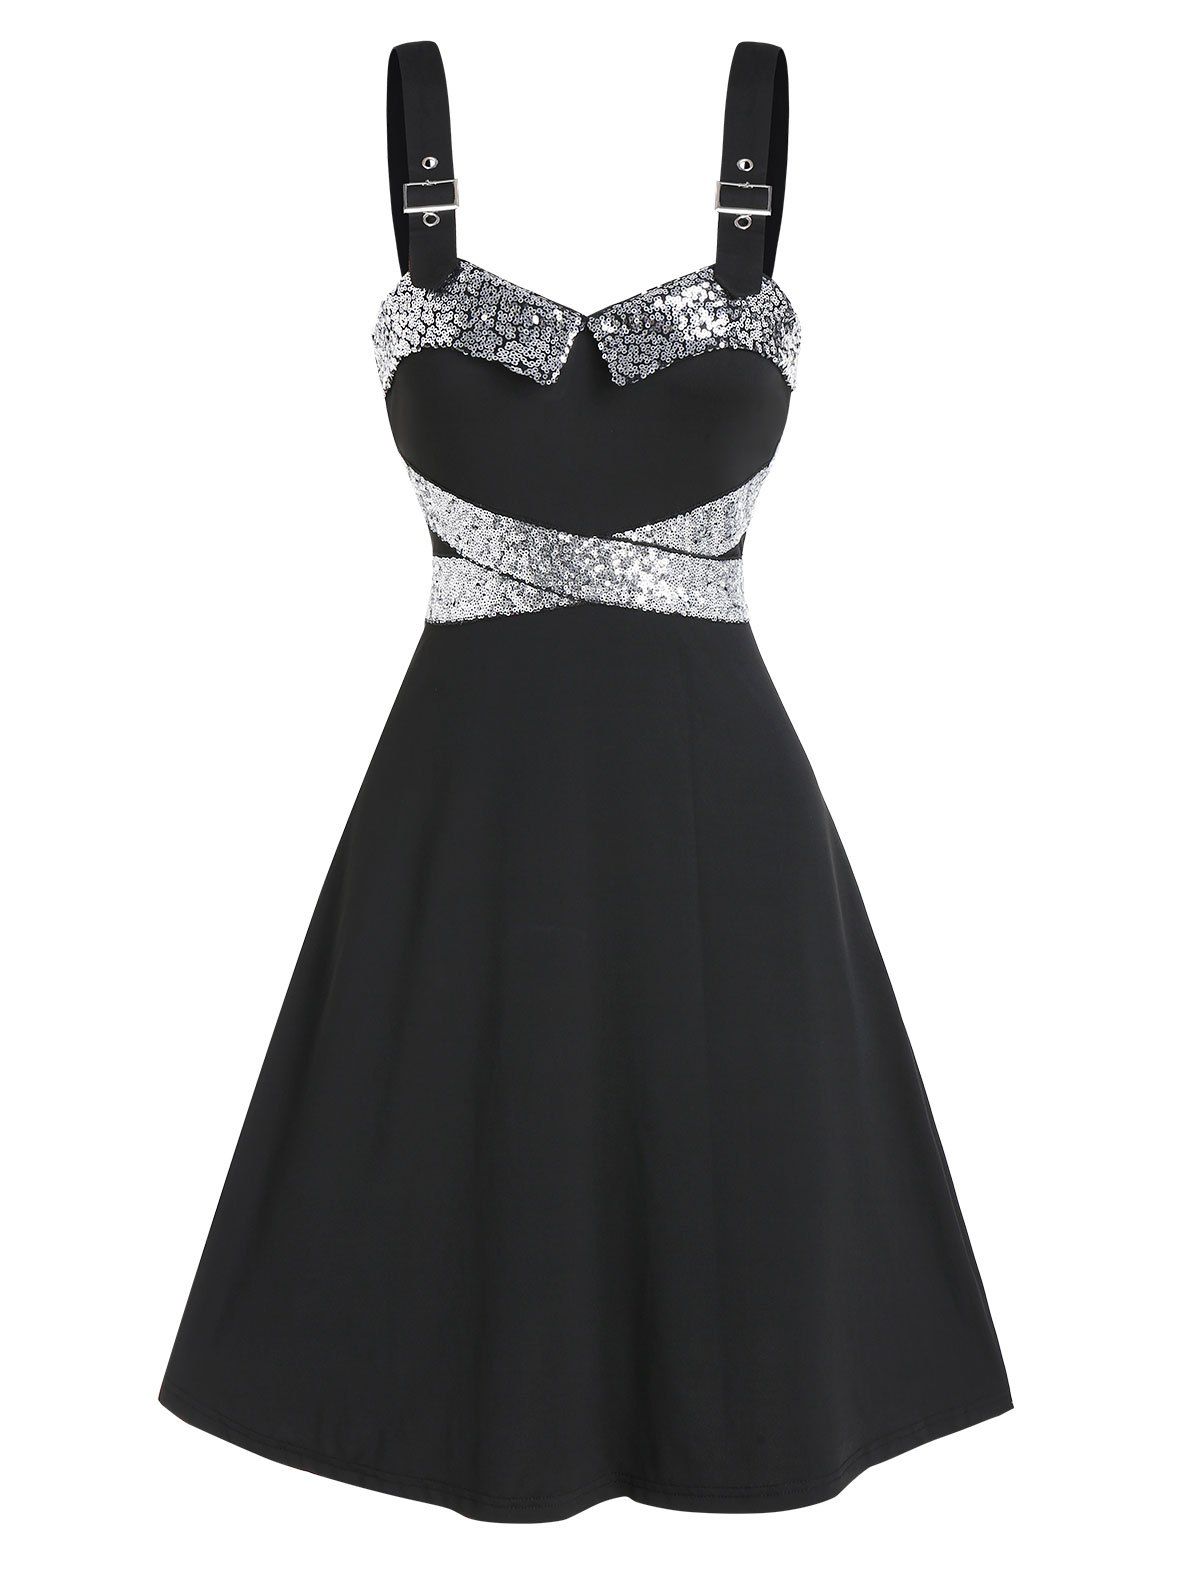 Sparkling Sweetheart Neck A Line Dress - BLACK M